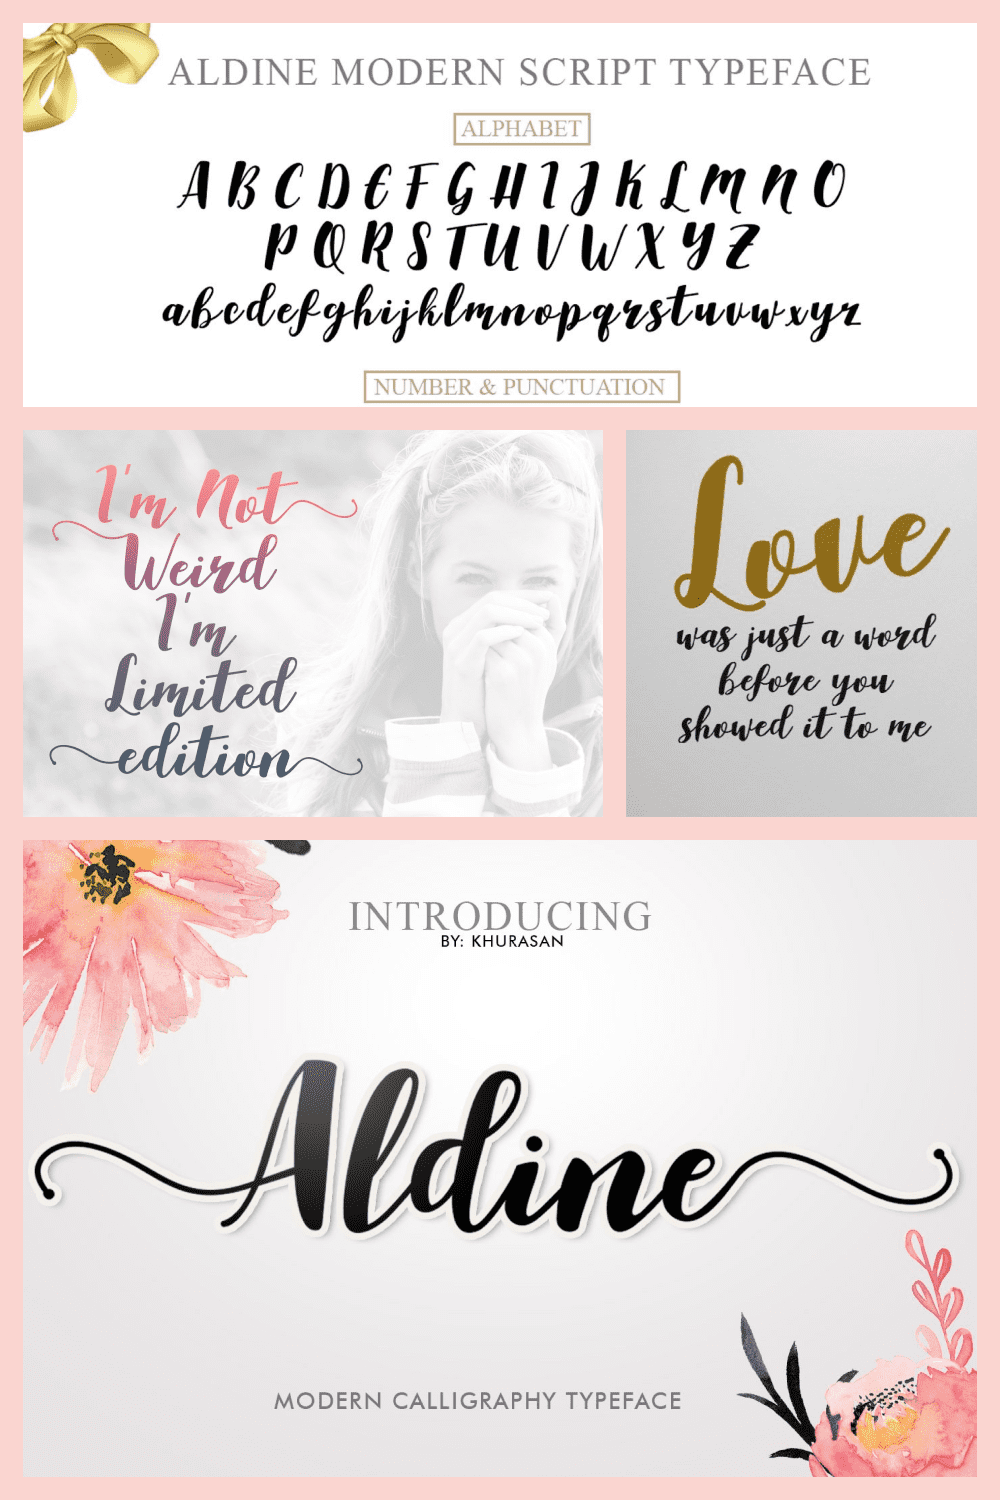 Aldine Handmade Calligraphy Script - MasterBundles - Pinterest Collage Image.